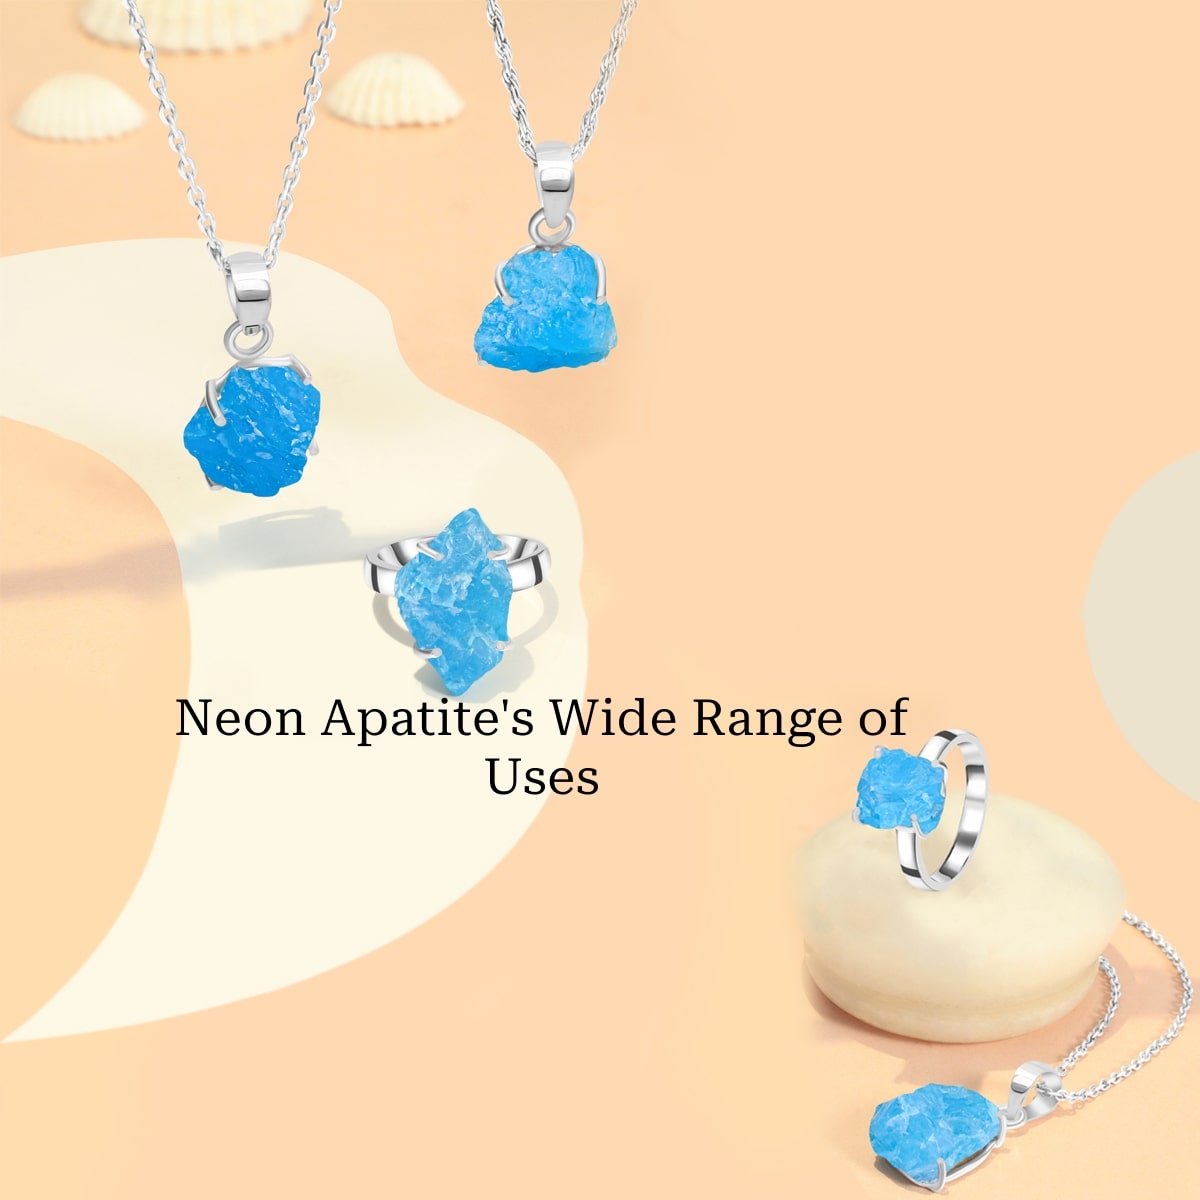 Uses of Neon Apatite